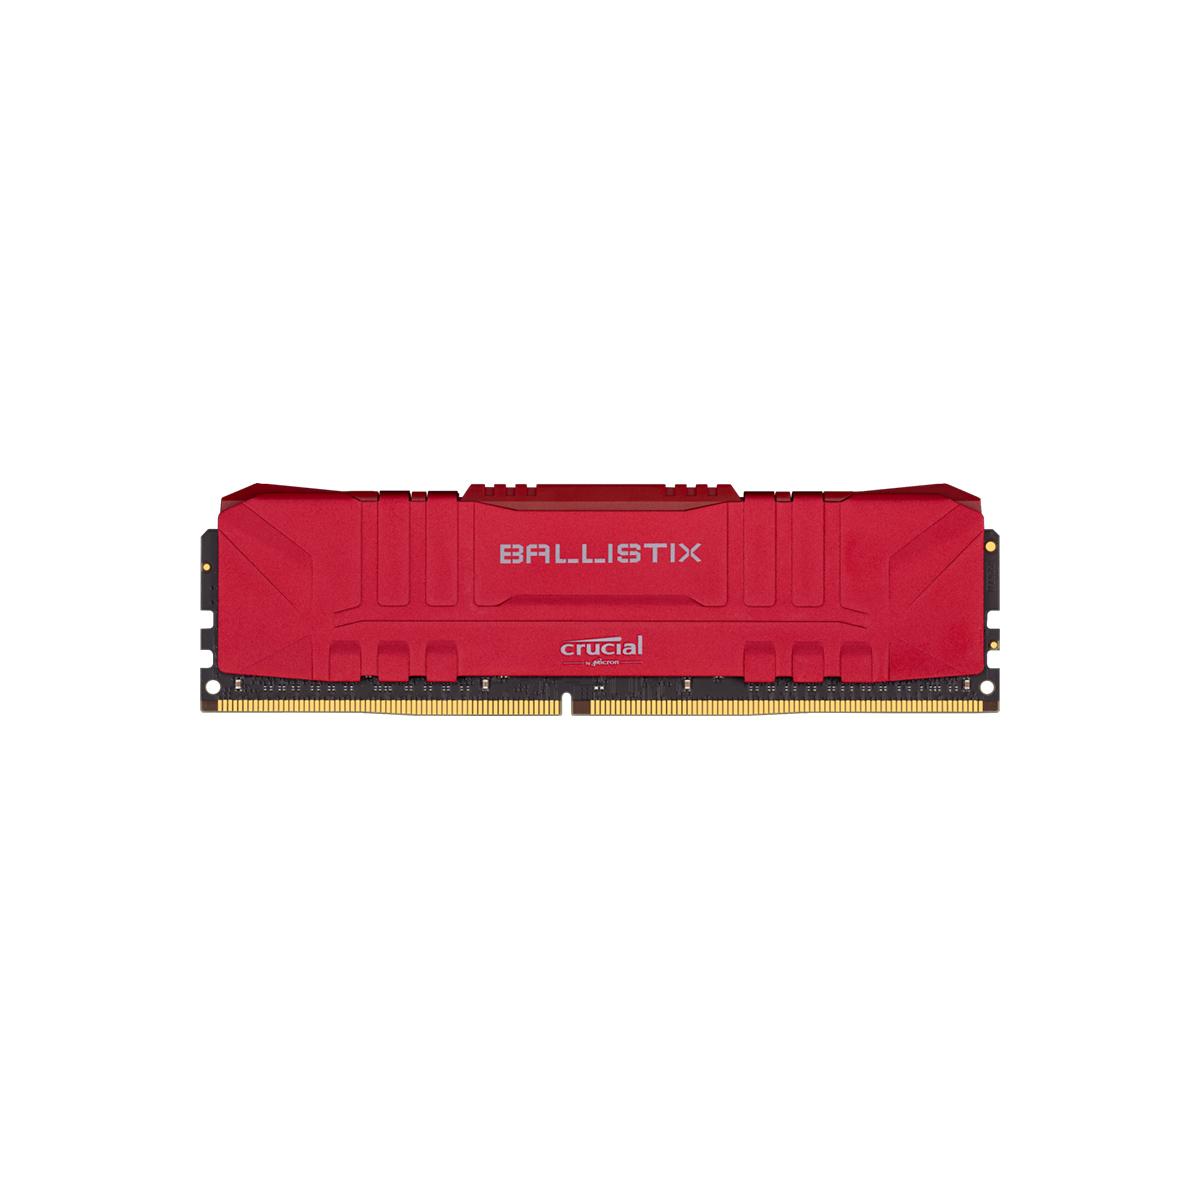 MEMORIA DIMM DDR4 CRUCIAL BALLISTIX (BL16G32C16U4R) 16GB 3200MHZ, RED HEATSINK, CL16 - CRUCIAL